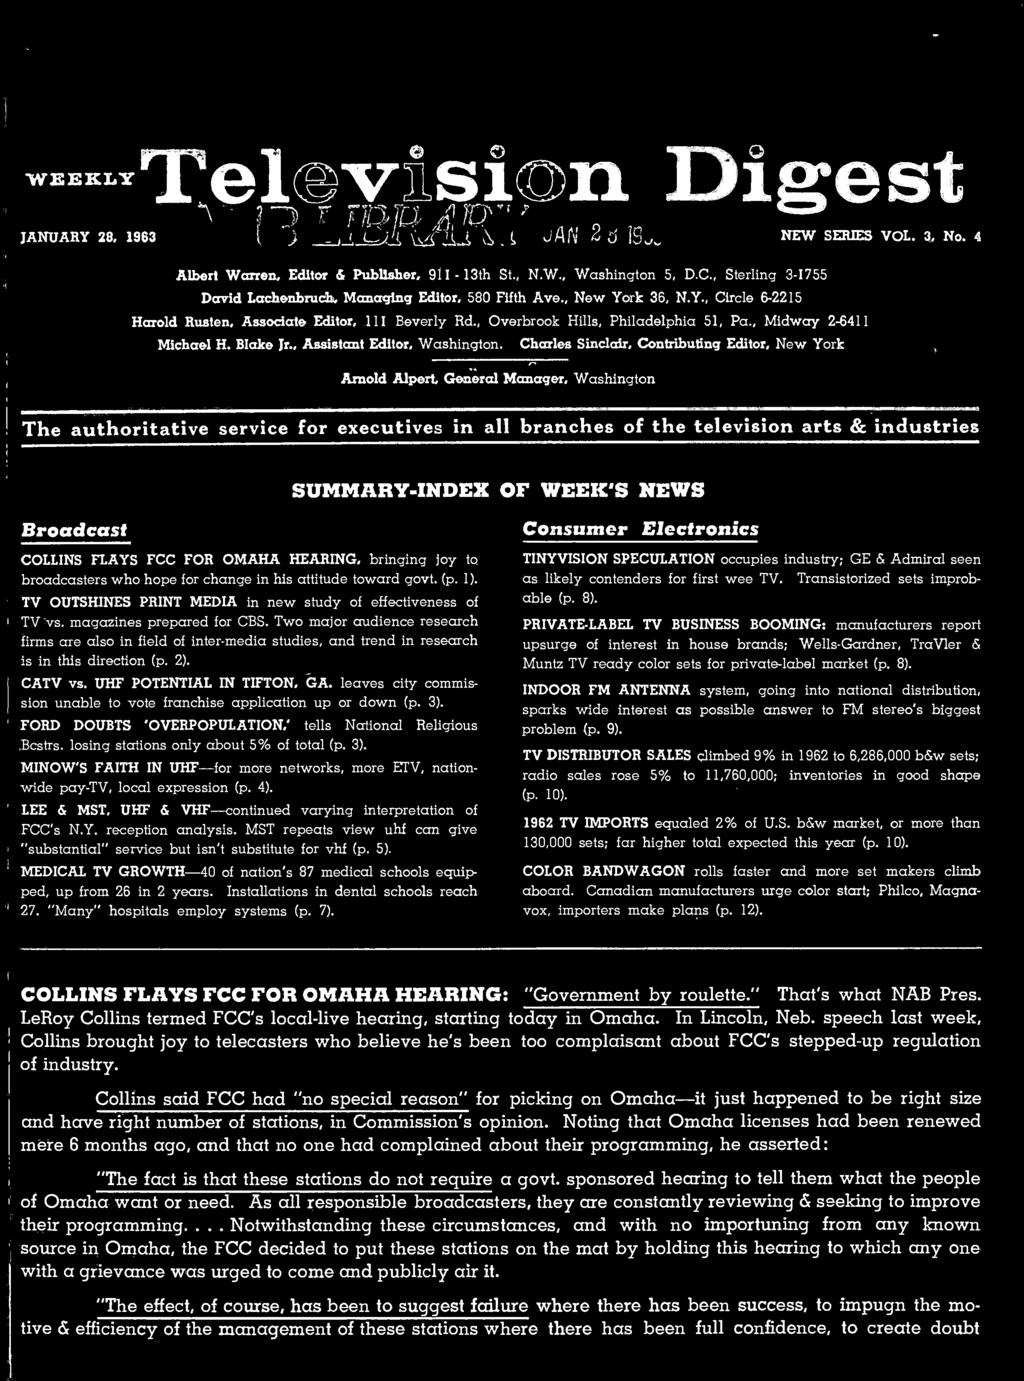 www.americanradiohistory.com WEEKLY JANUARY 28, 1963 Televisioniln y-,,r 7 ry 2 1 NEW SERIES VOL. 3, No. 4 Albert Warren, Editor & Publisher, 91I - 13th St., N.W., Washington 5, D.C.